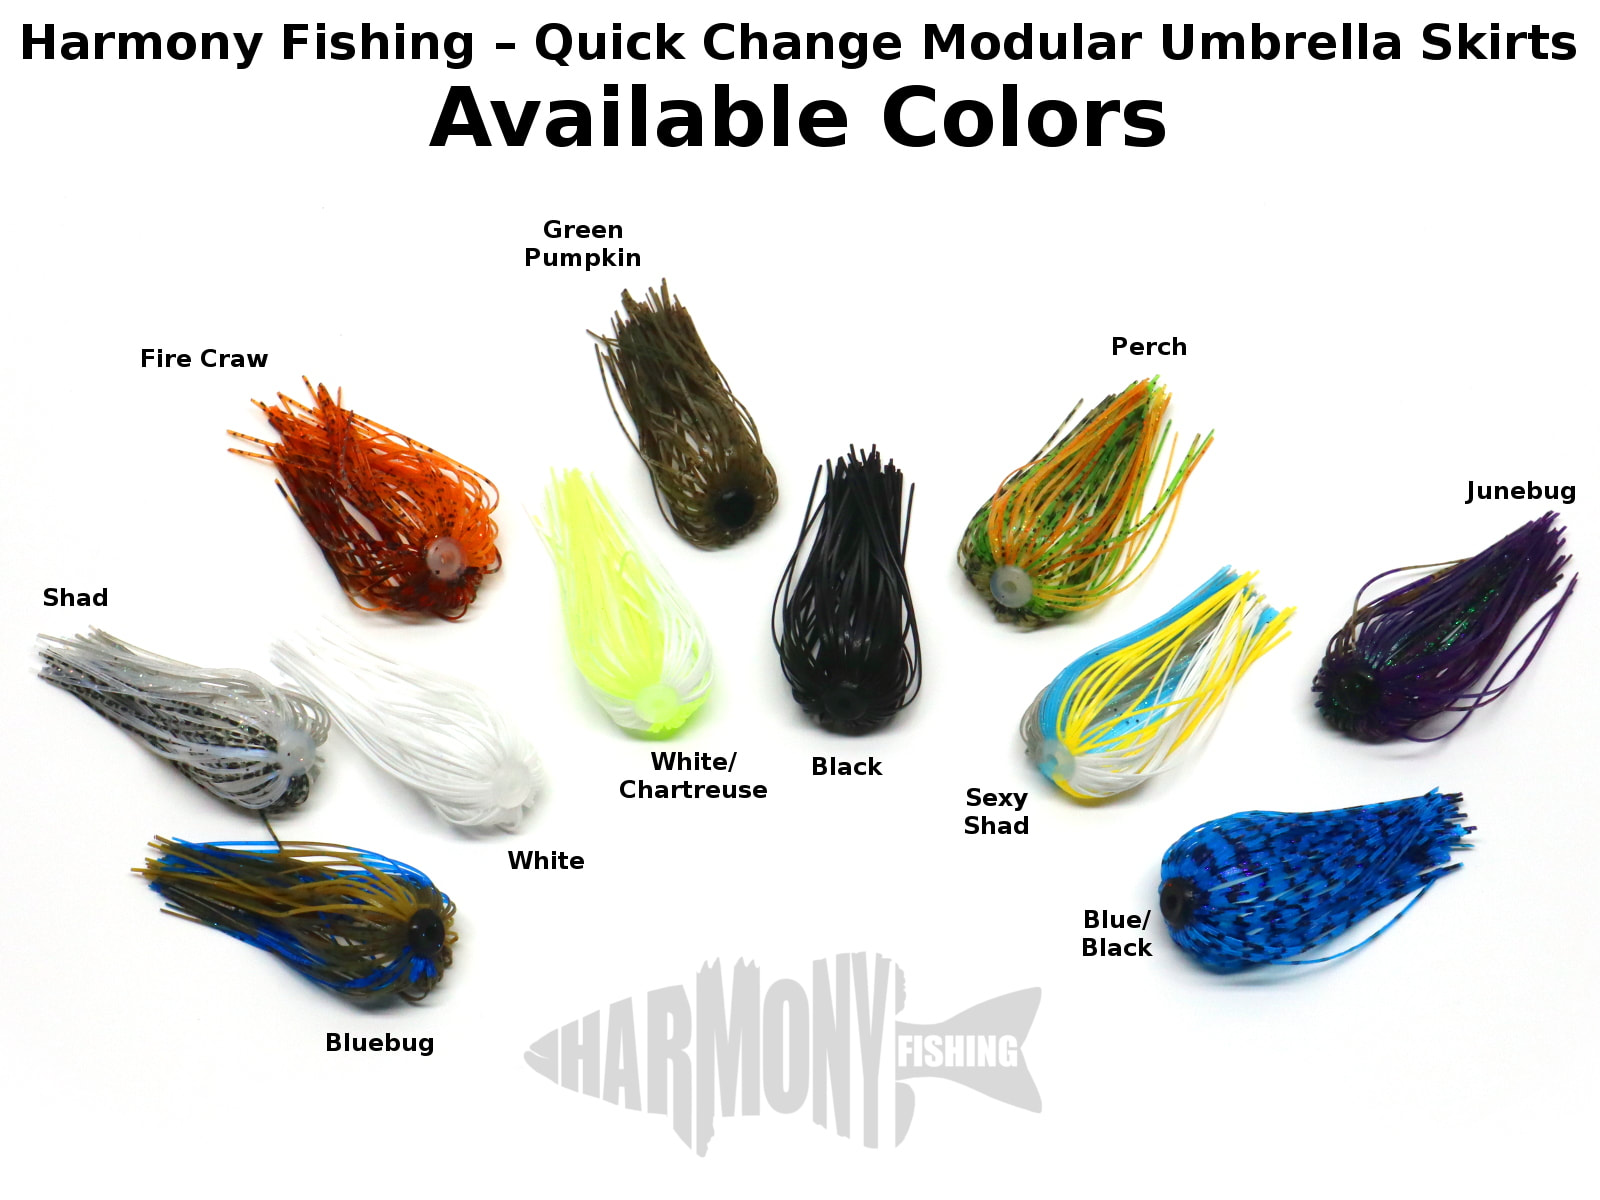 Harmony Fishing – Quick Change Modular Umbrella Skirts for Fishing Jigs/ Lures/Baits (10 Pack)